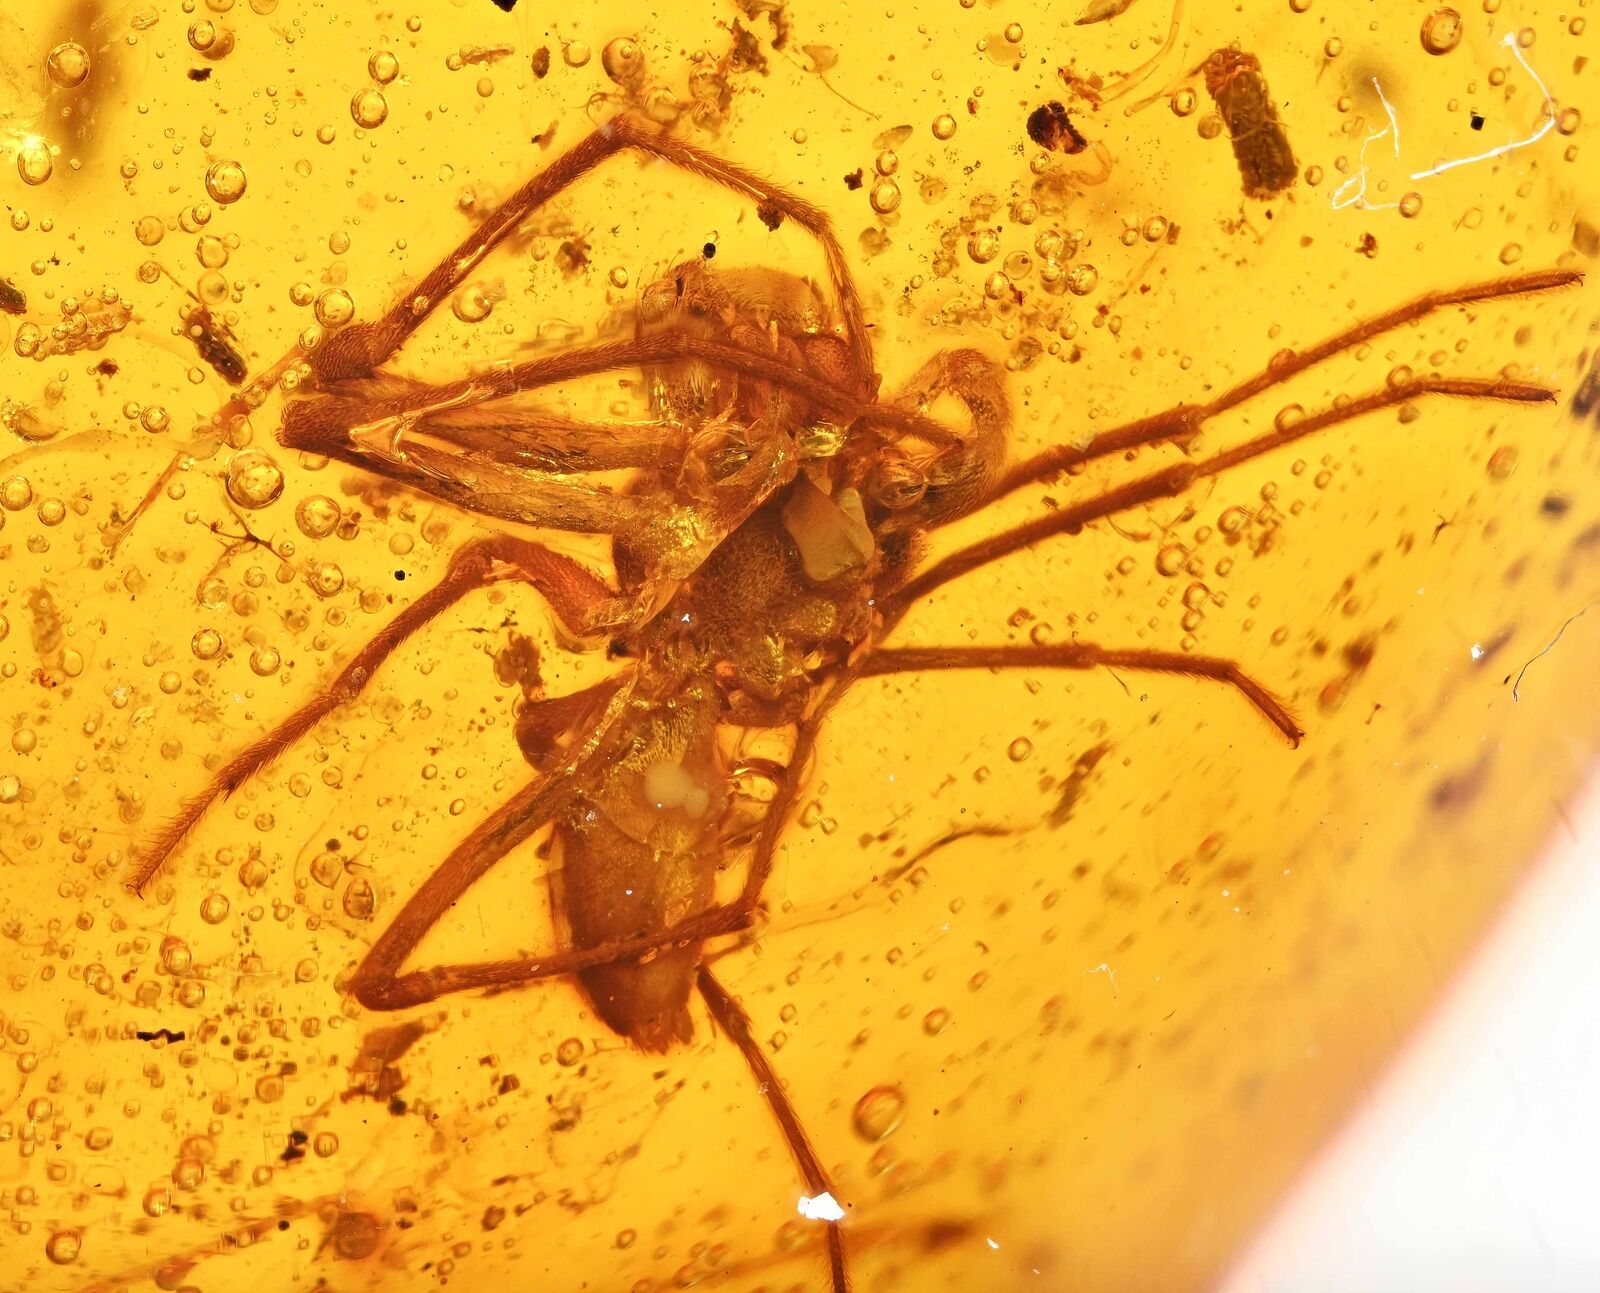 Large Araneae: Araneida (Spider), Fossil Inclusion in Burmese Amber